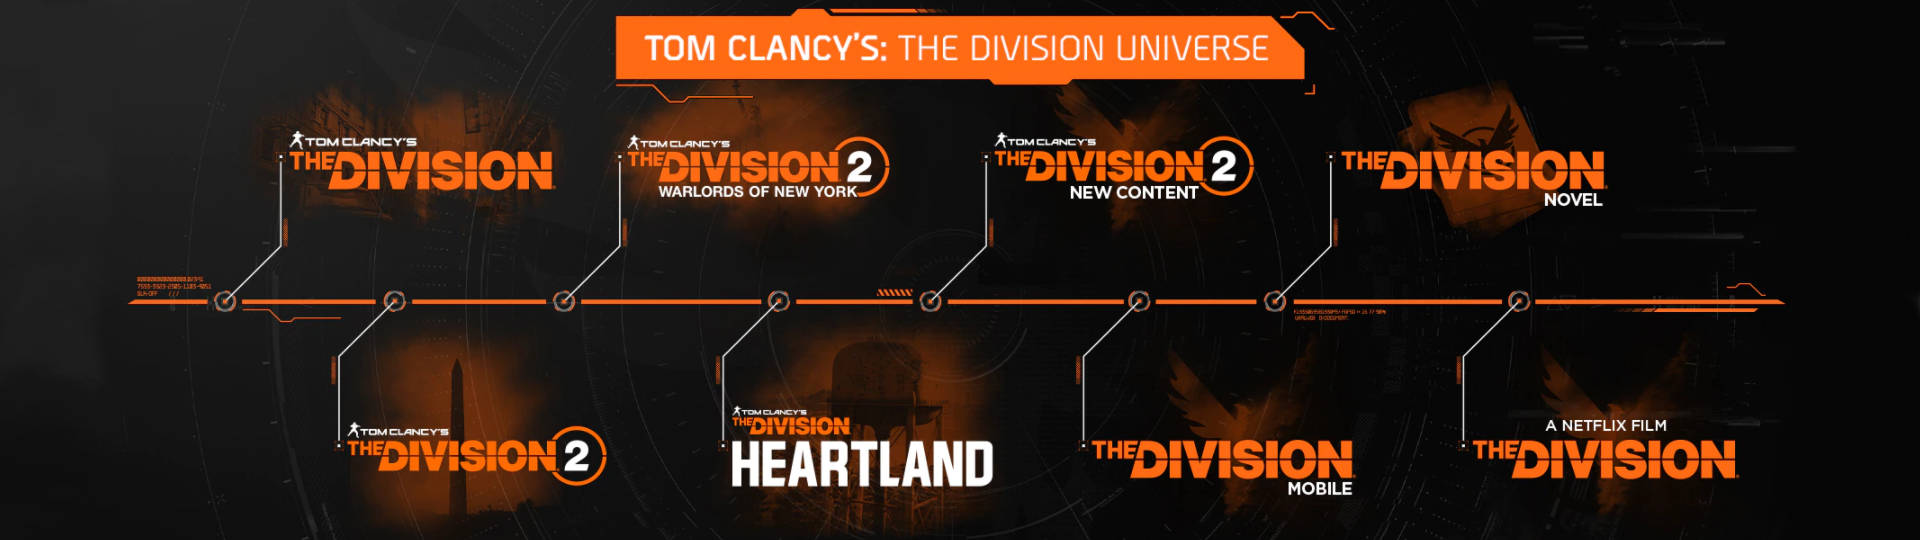 The Division mobile game Heartland Netflix slice